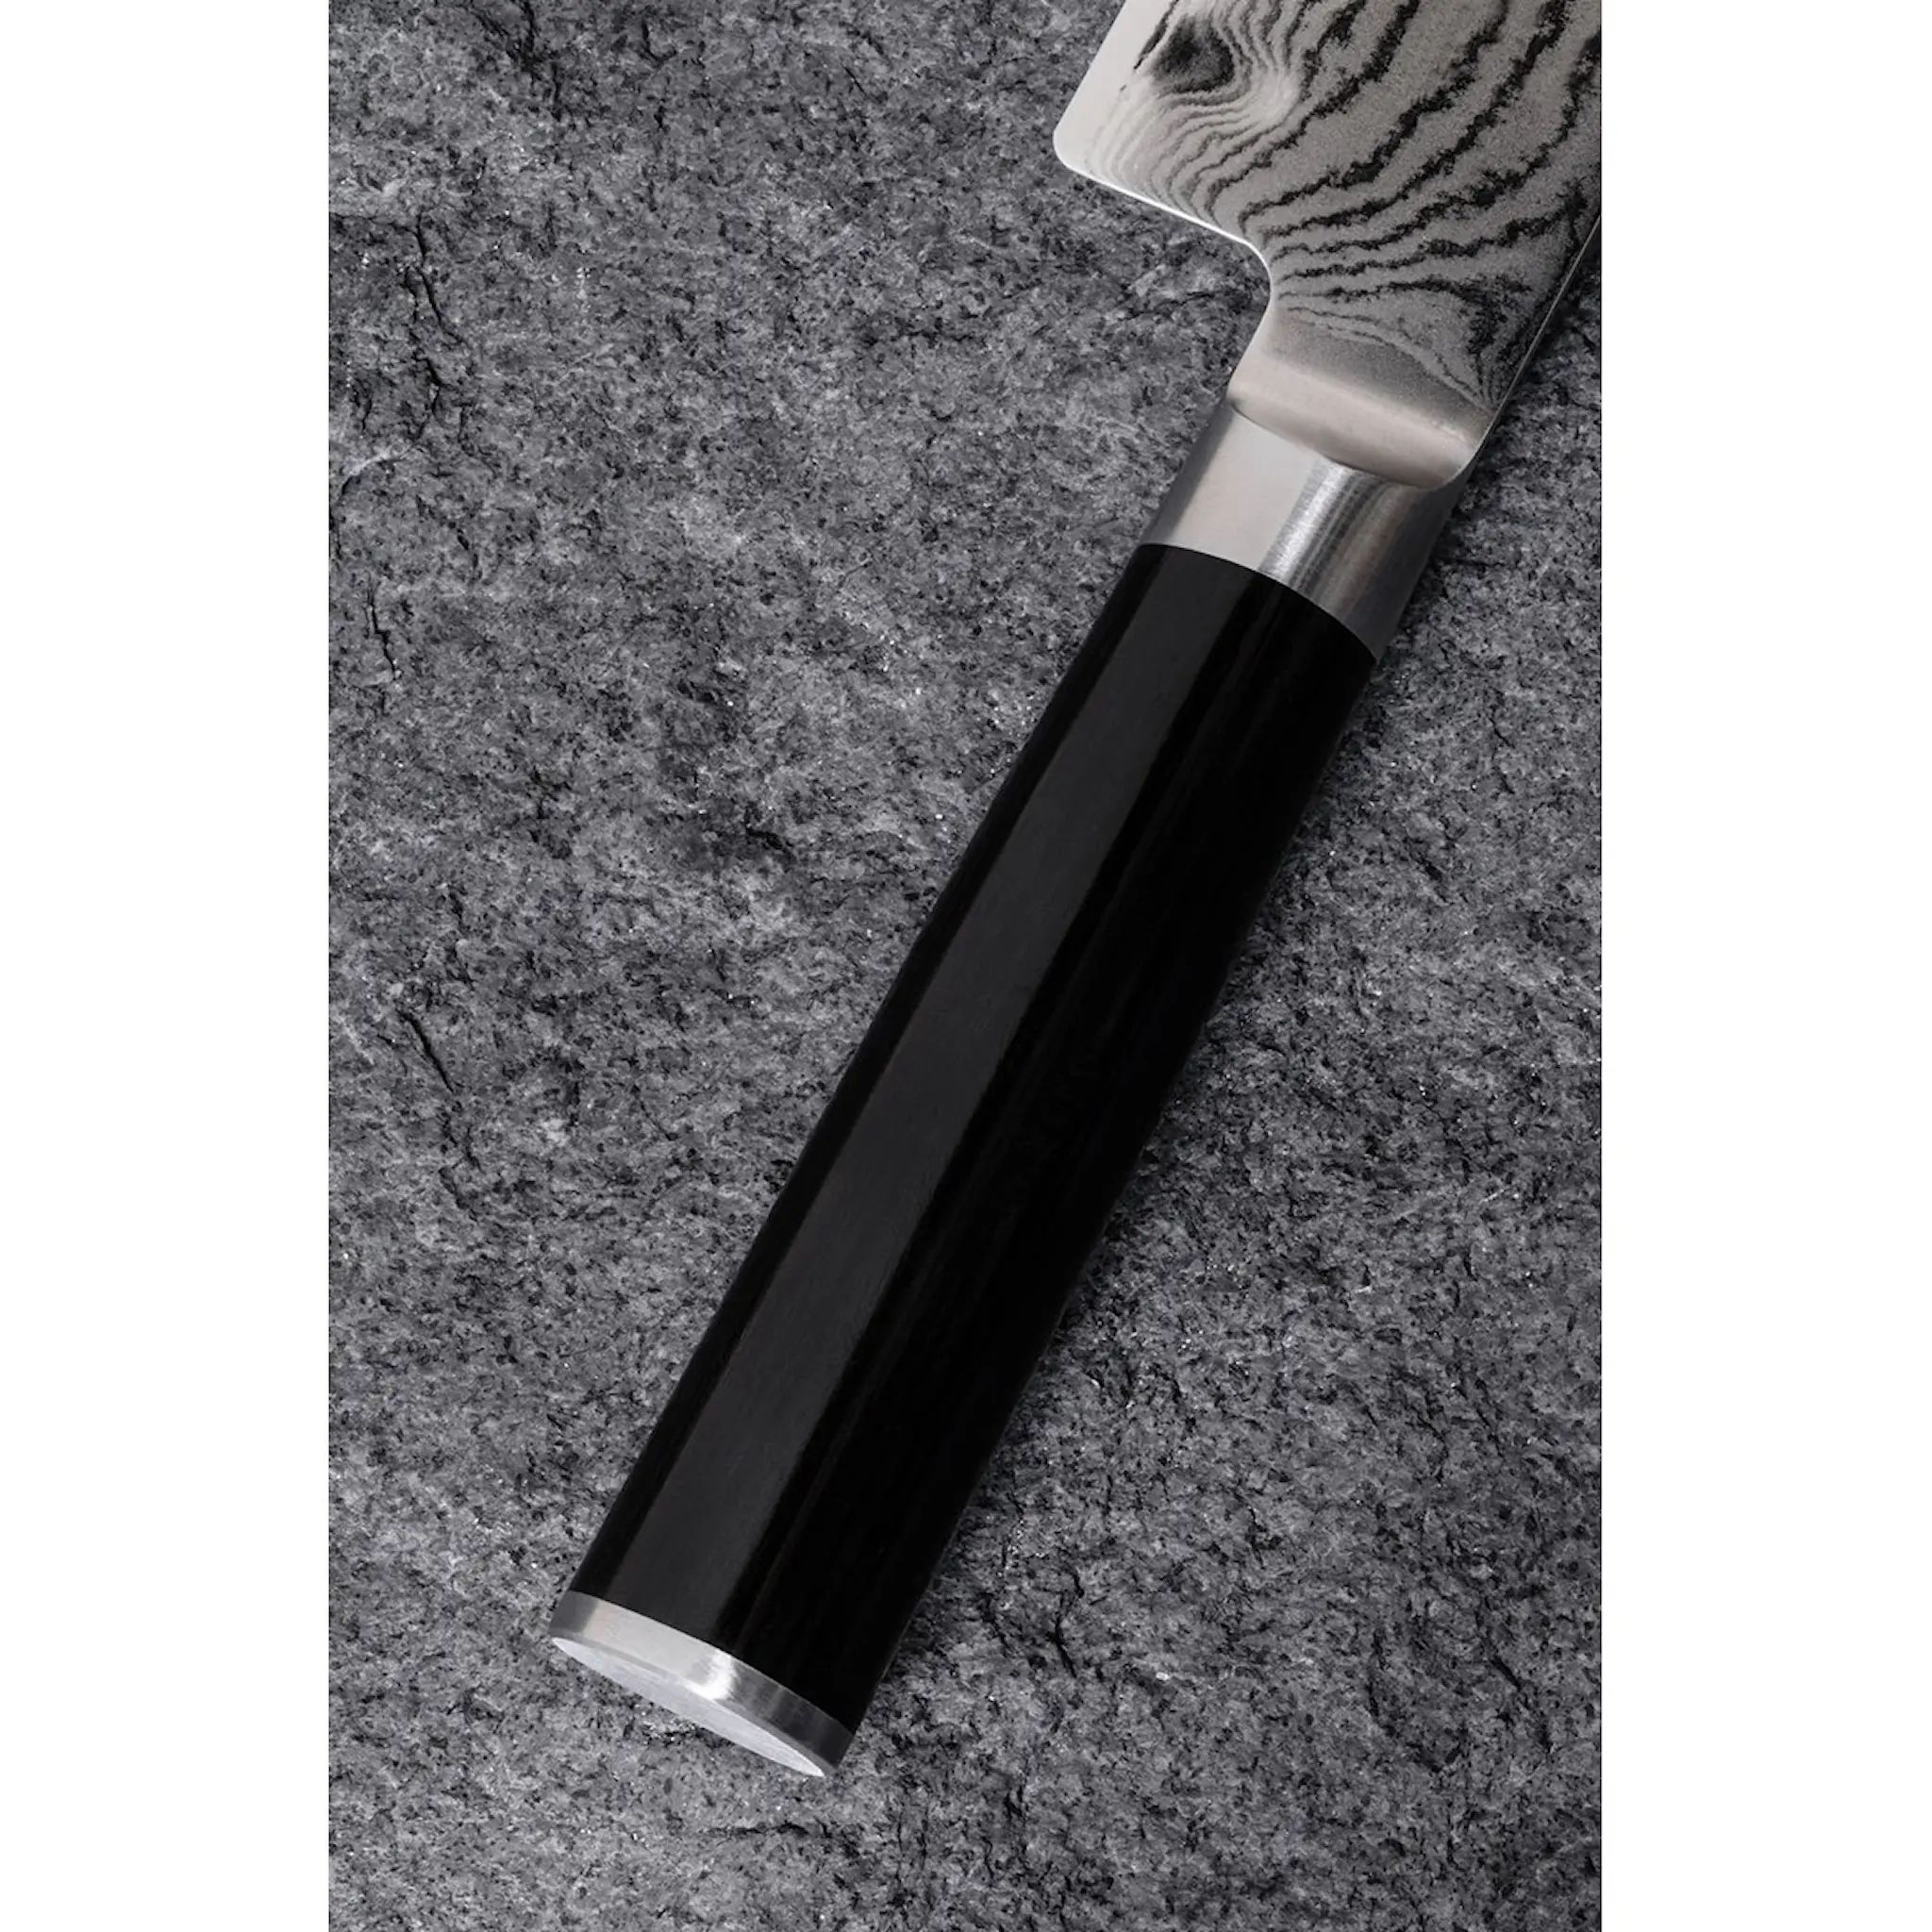 KAI Shun Classic Brödkniv 22,5 cm